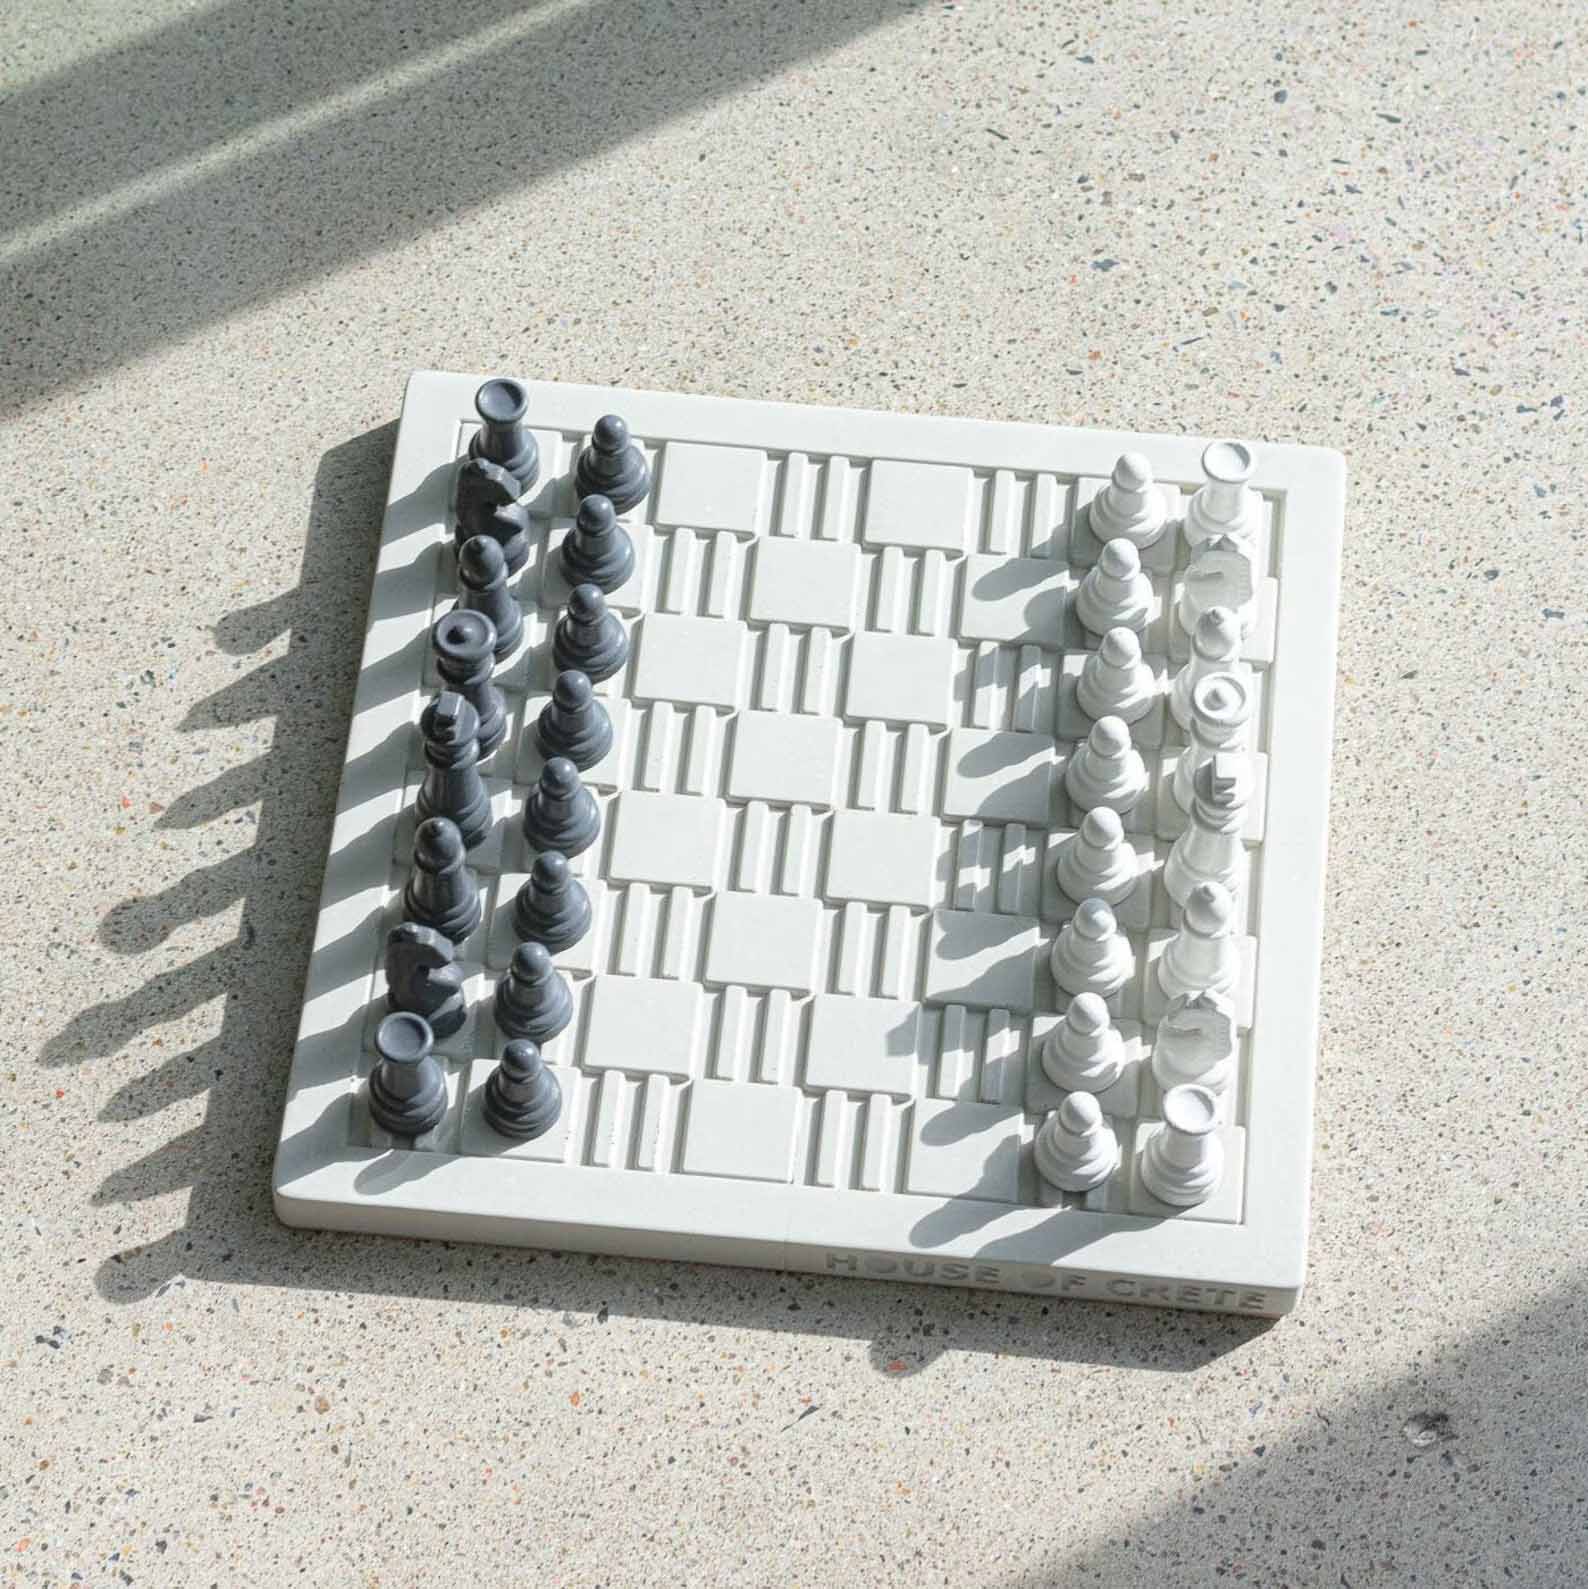 Modern Gift Idea - A Concrete Chess Set